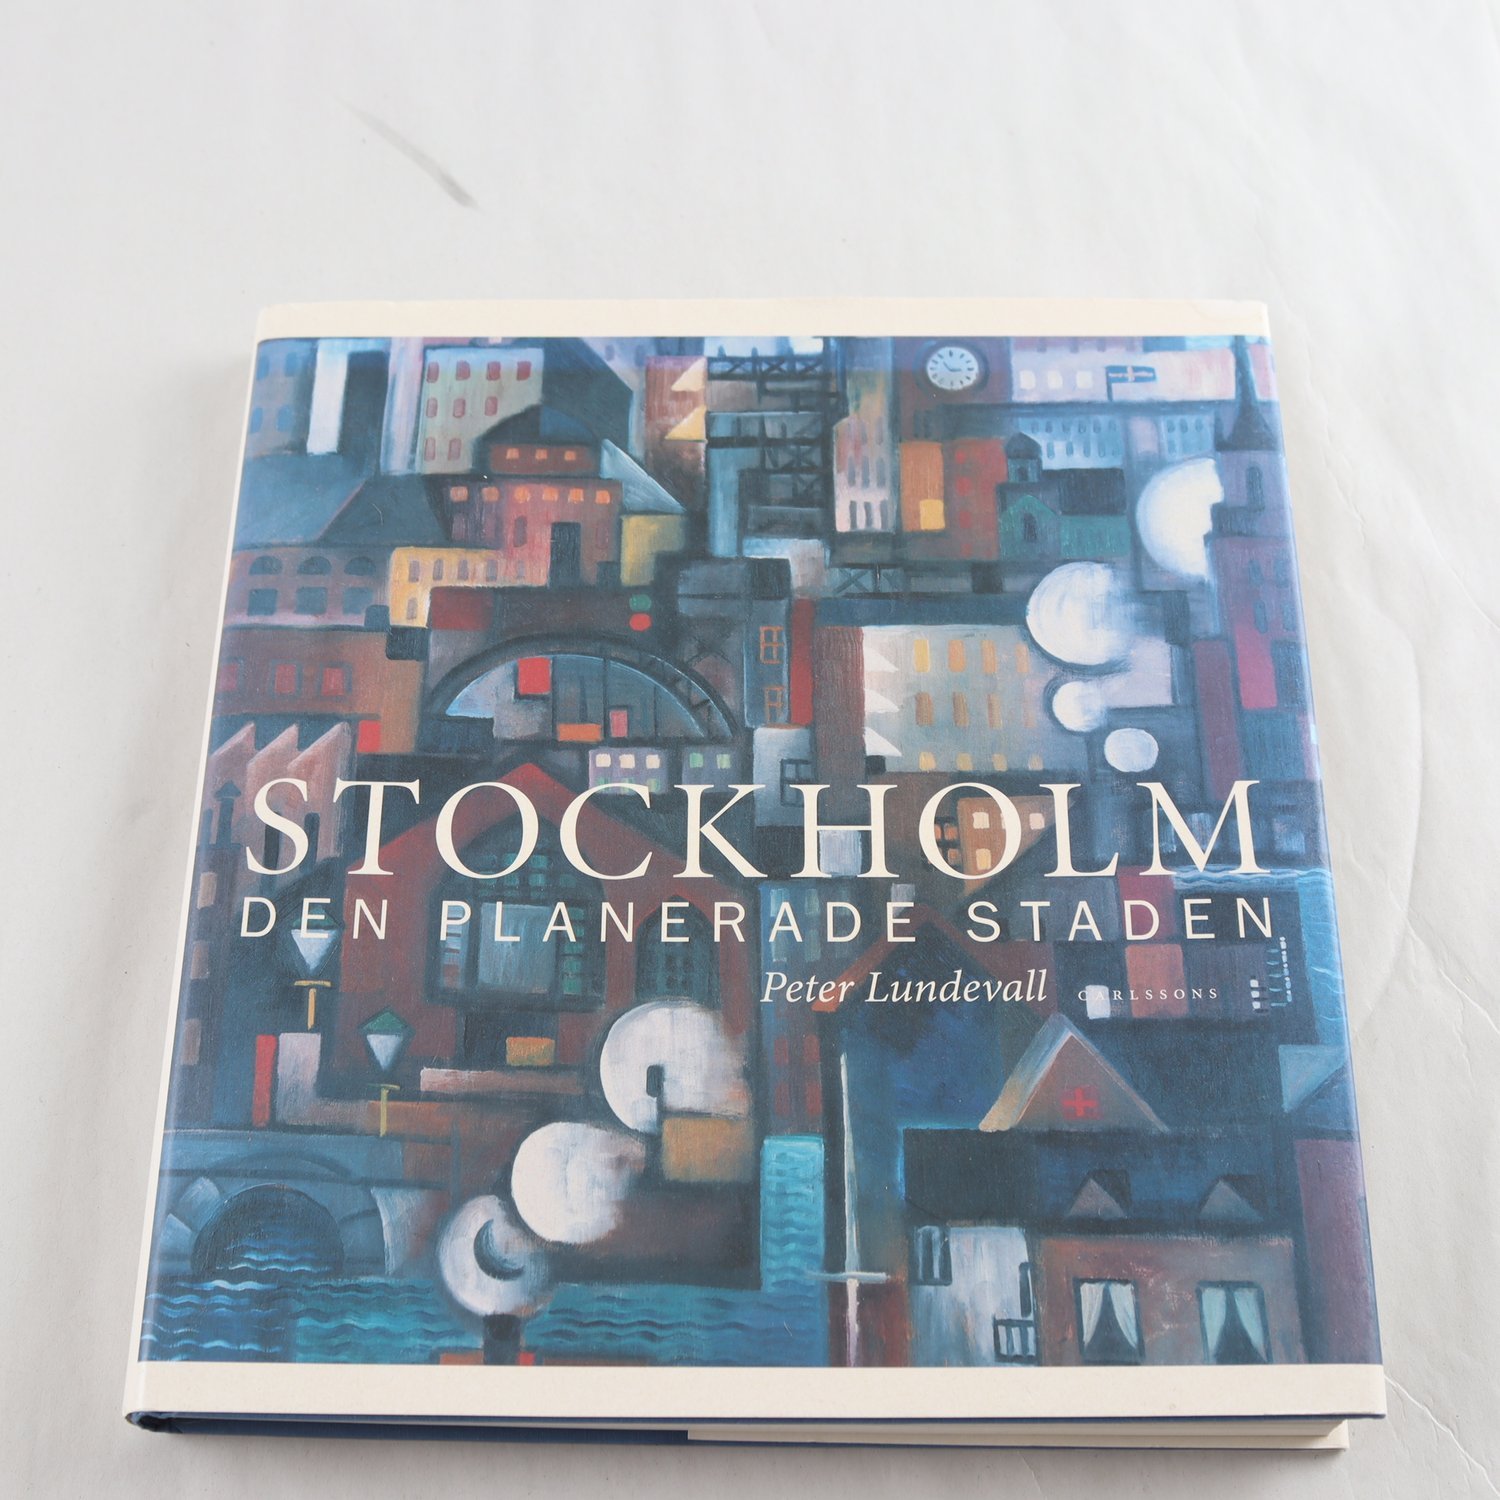 Stockholm, Den planerade staden, Peter Lundevall